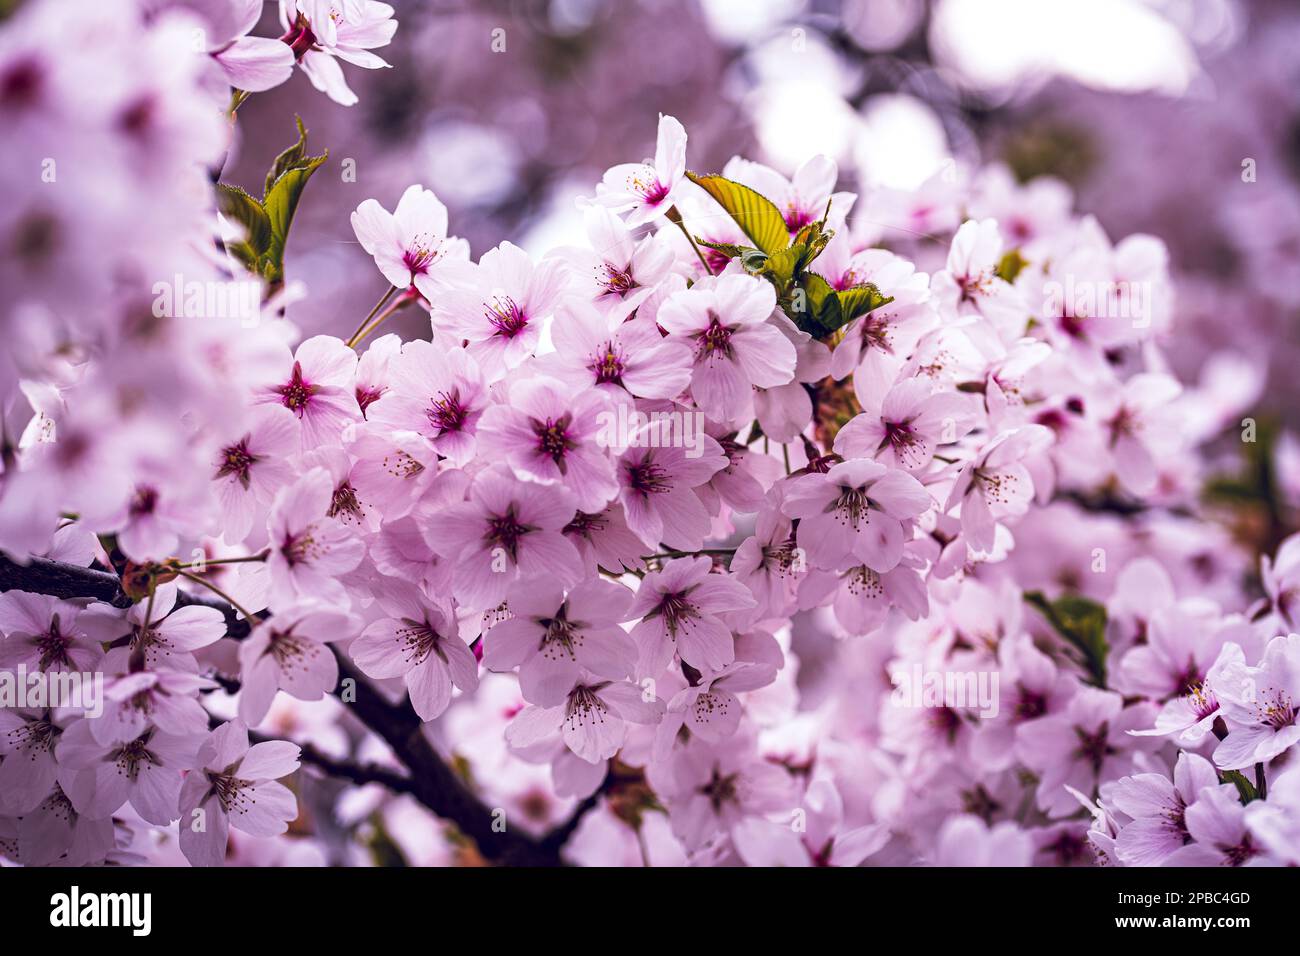 Ein blühendes Wunder: Sakura-Bäume in voller Blüte. Sakura Bäume, auch bekannt als Kirschblütenbäume. Stockfoto